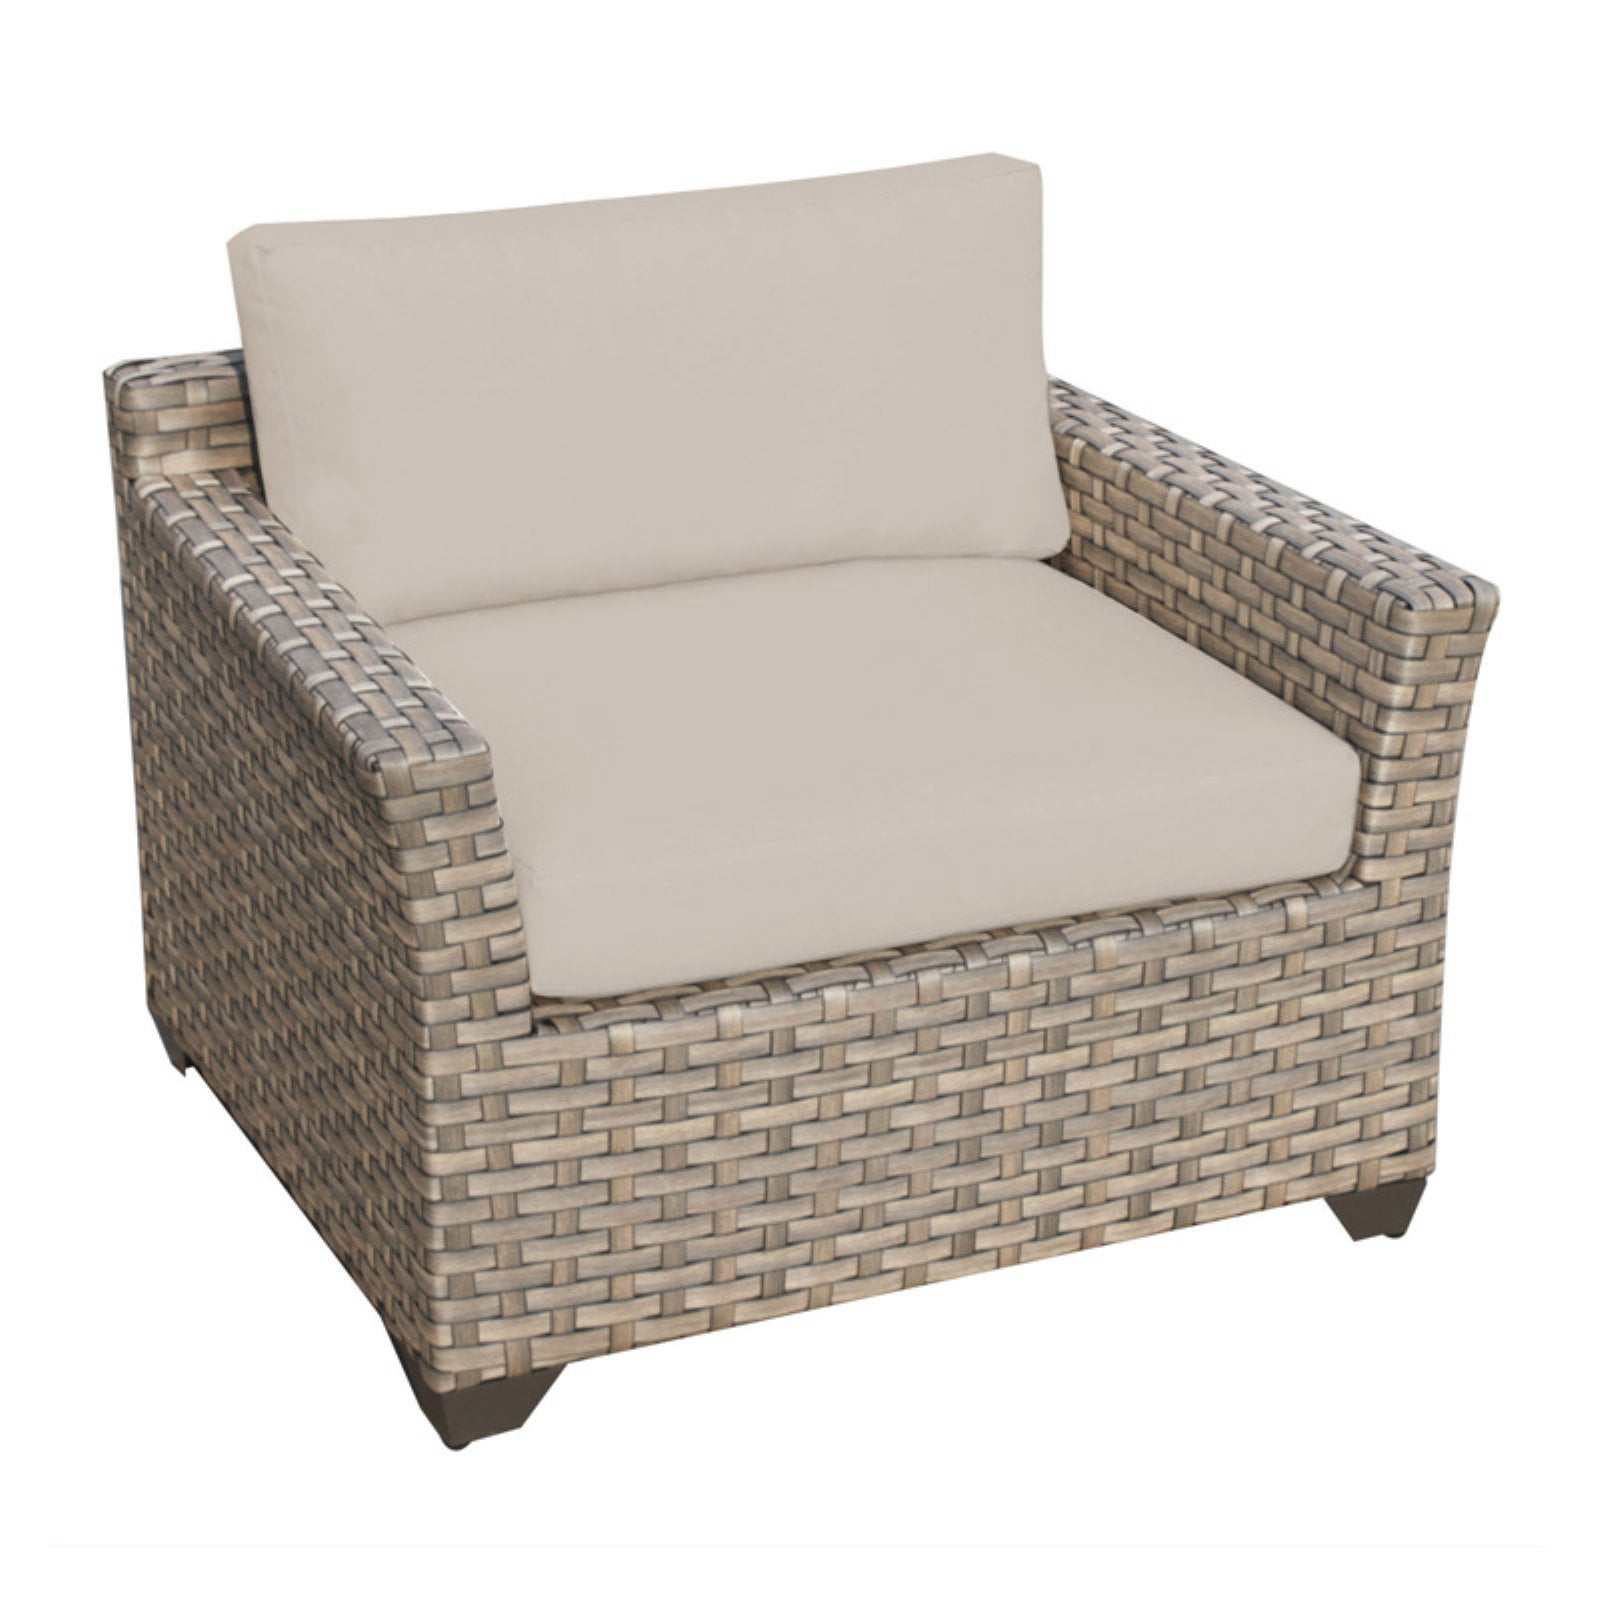 TK Classics Monterey Wicker Outdoor Club Chair - Set of 2 Cushion